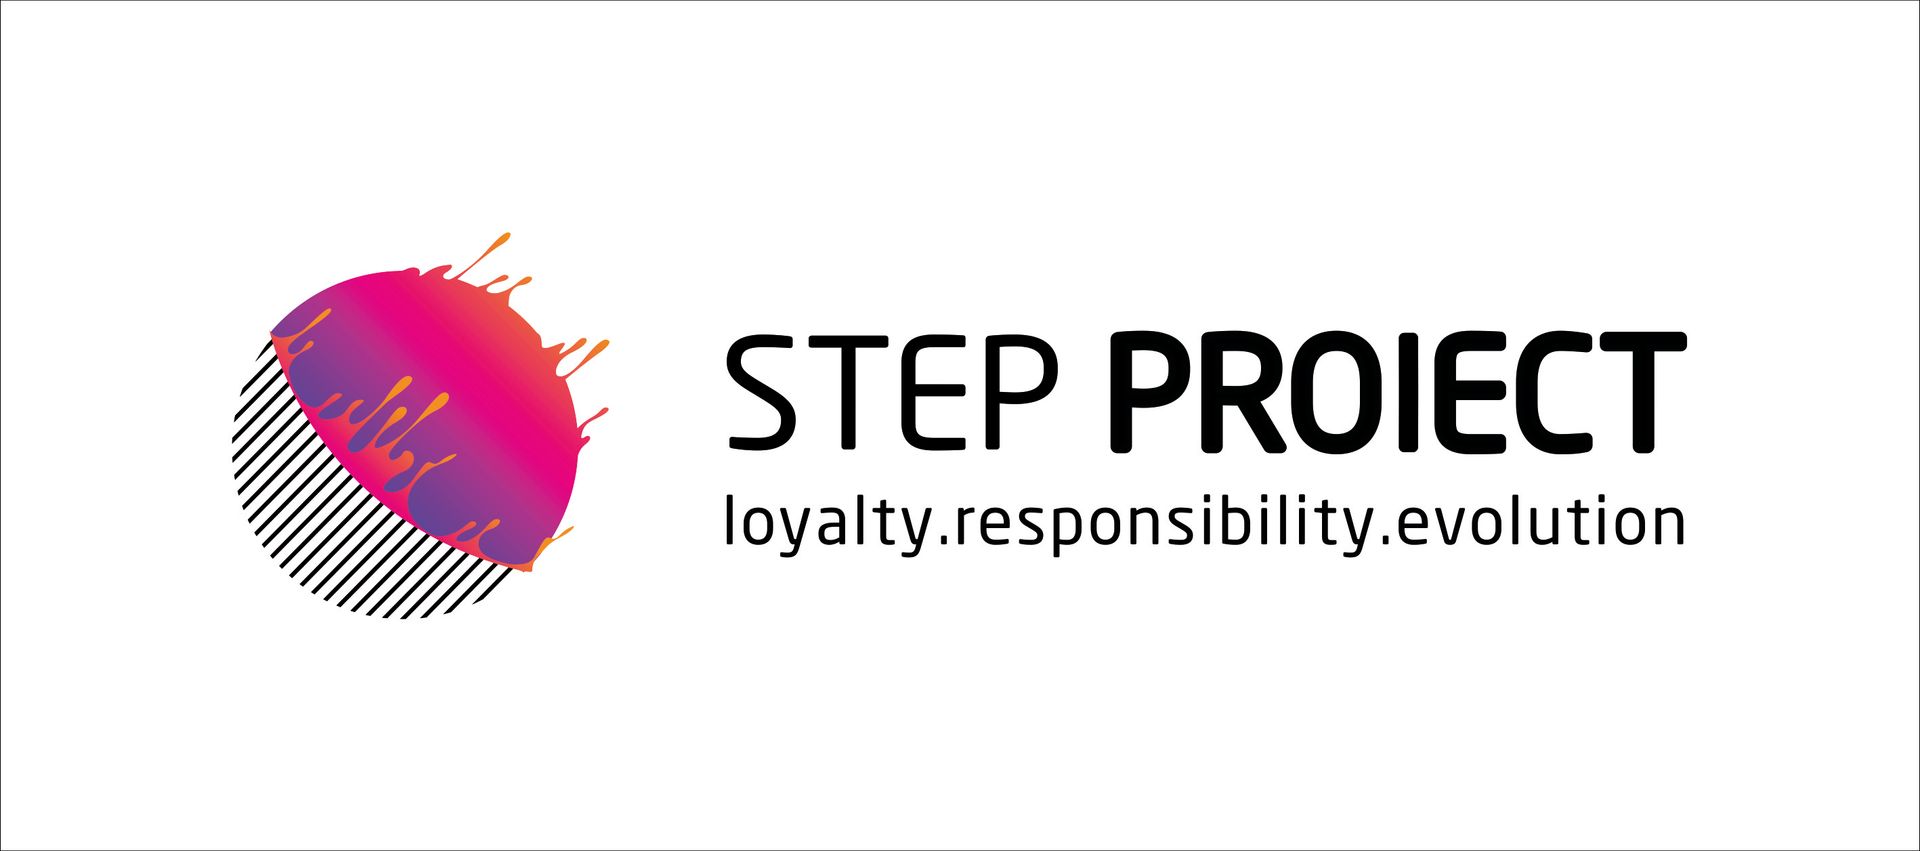 Step Proiect SRL